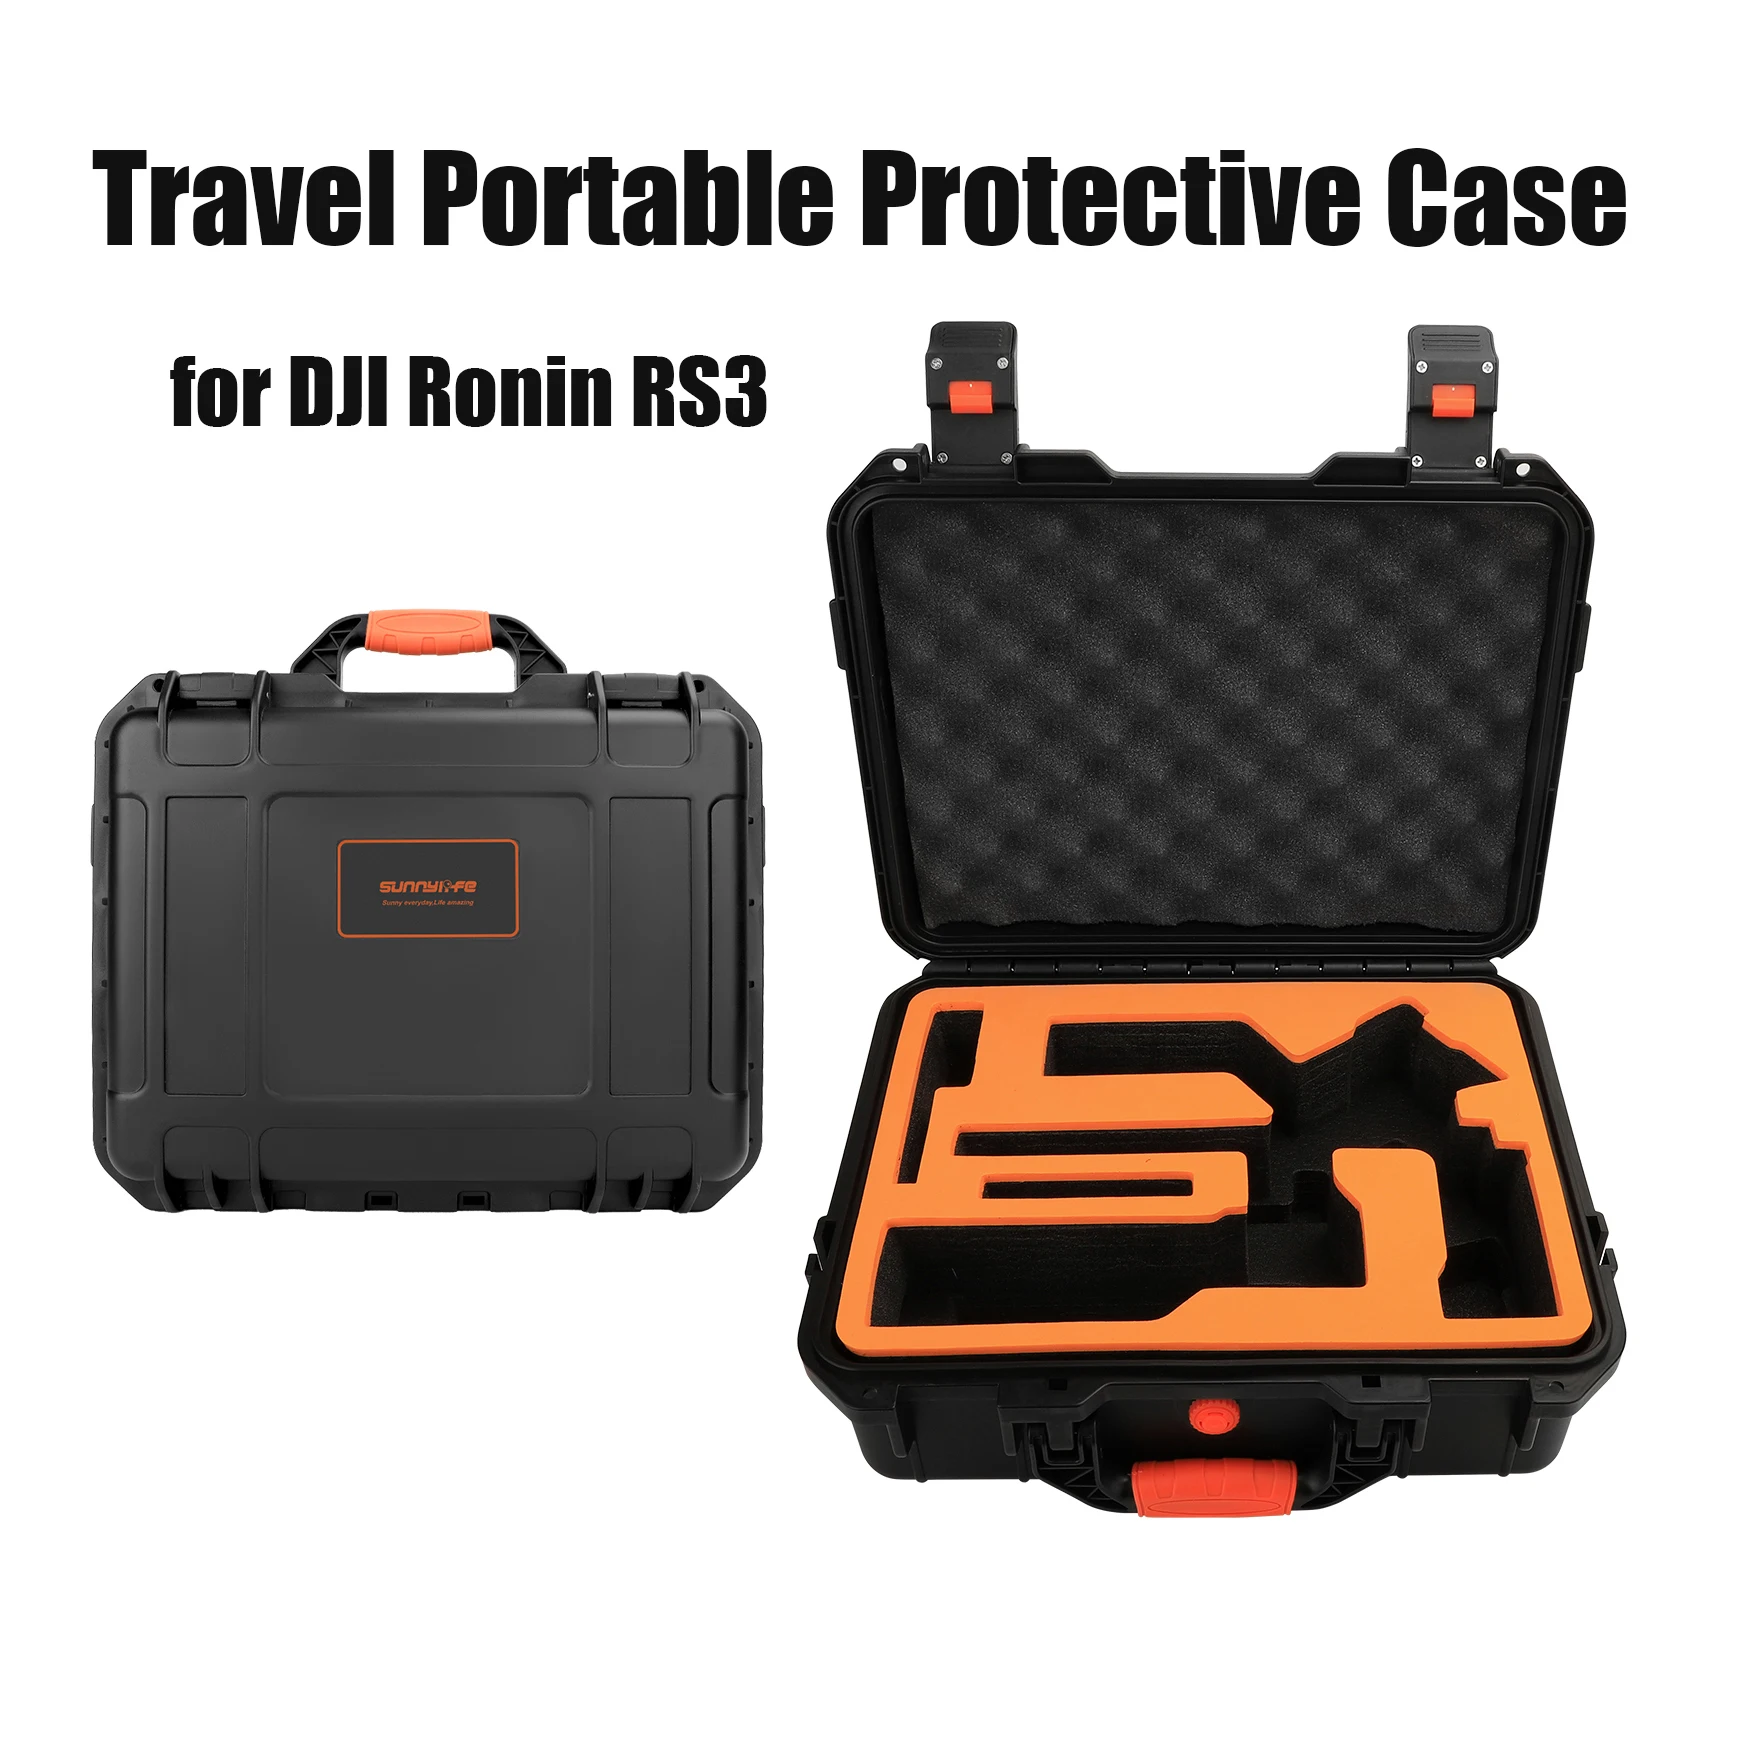 Für DJI Ronin RS3 Harte ABS Koffer/Wasserdicht Versiegelt Fall Reise Tragbare Schutzhülle für DJI RS 3 3-achsen Gimbal Stabilisator